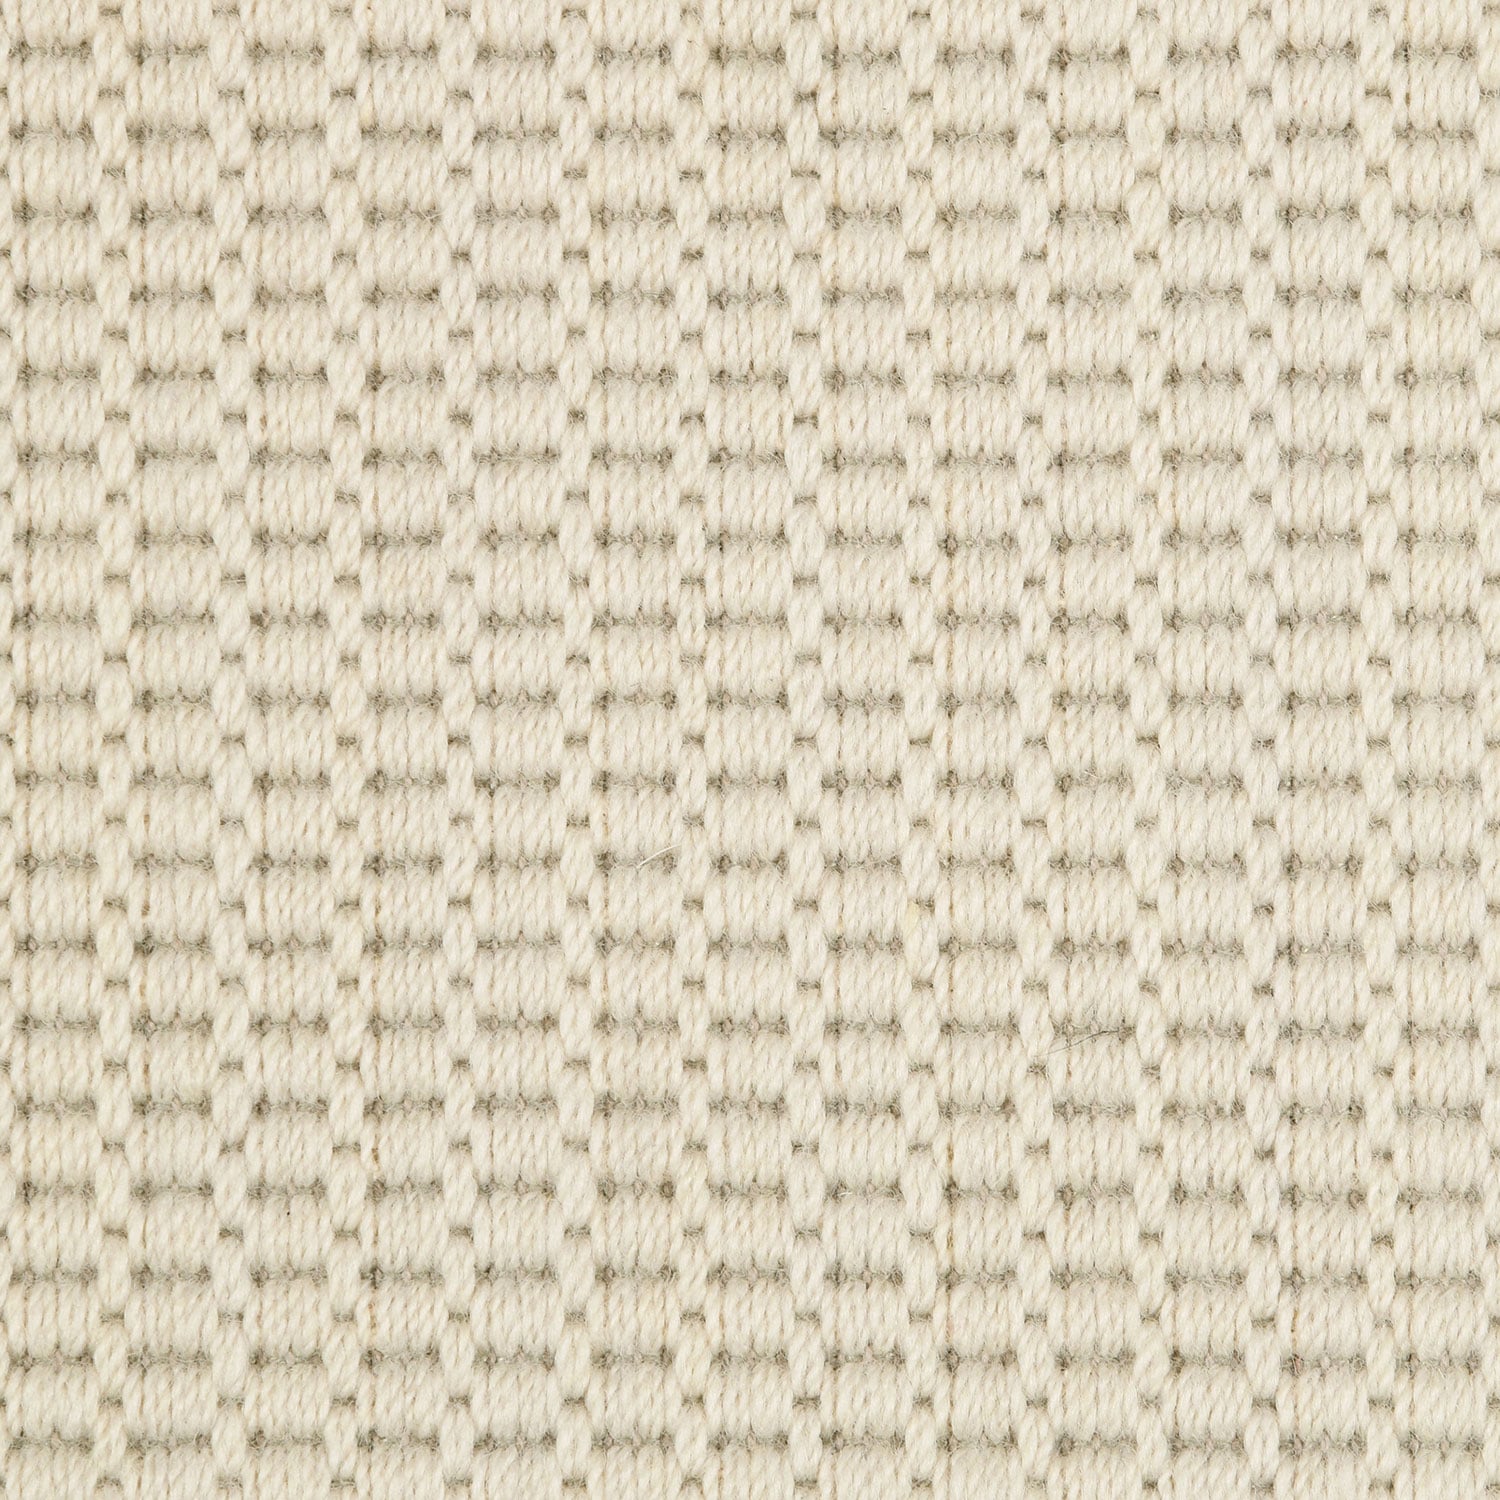 Lace: Chantilly - 100% New Zealand Wool Carpet